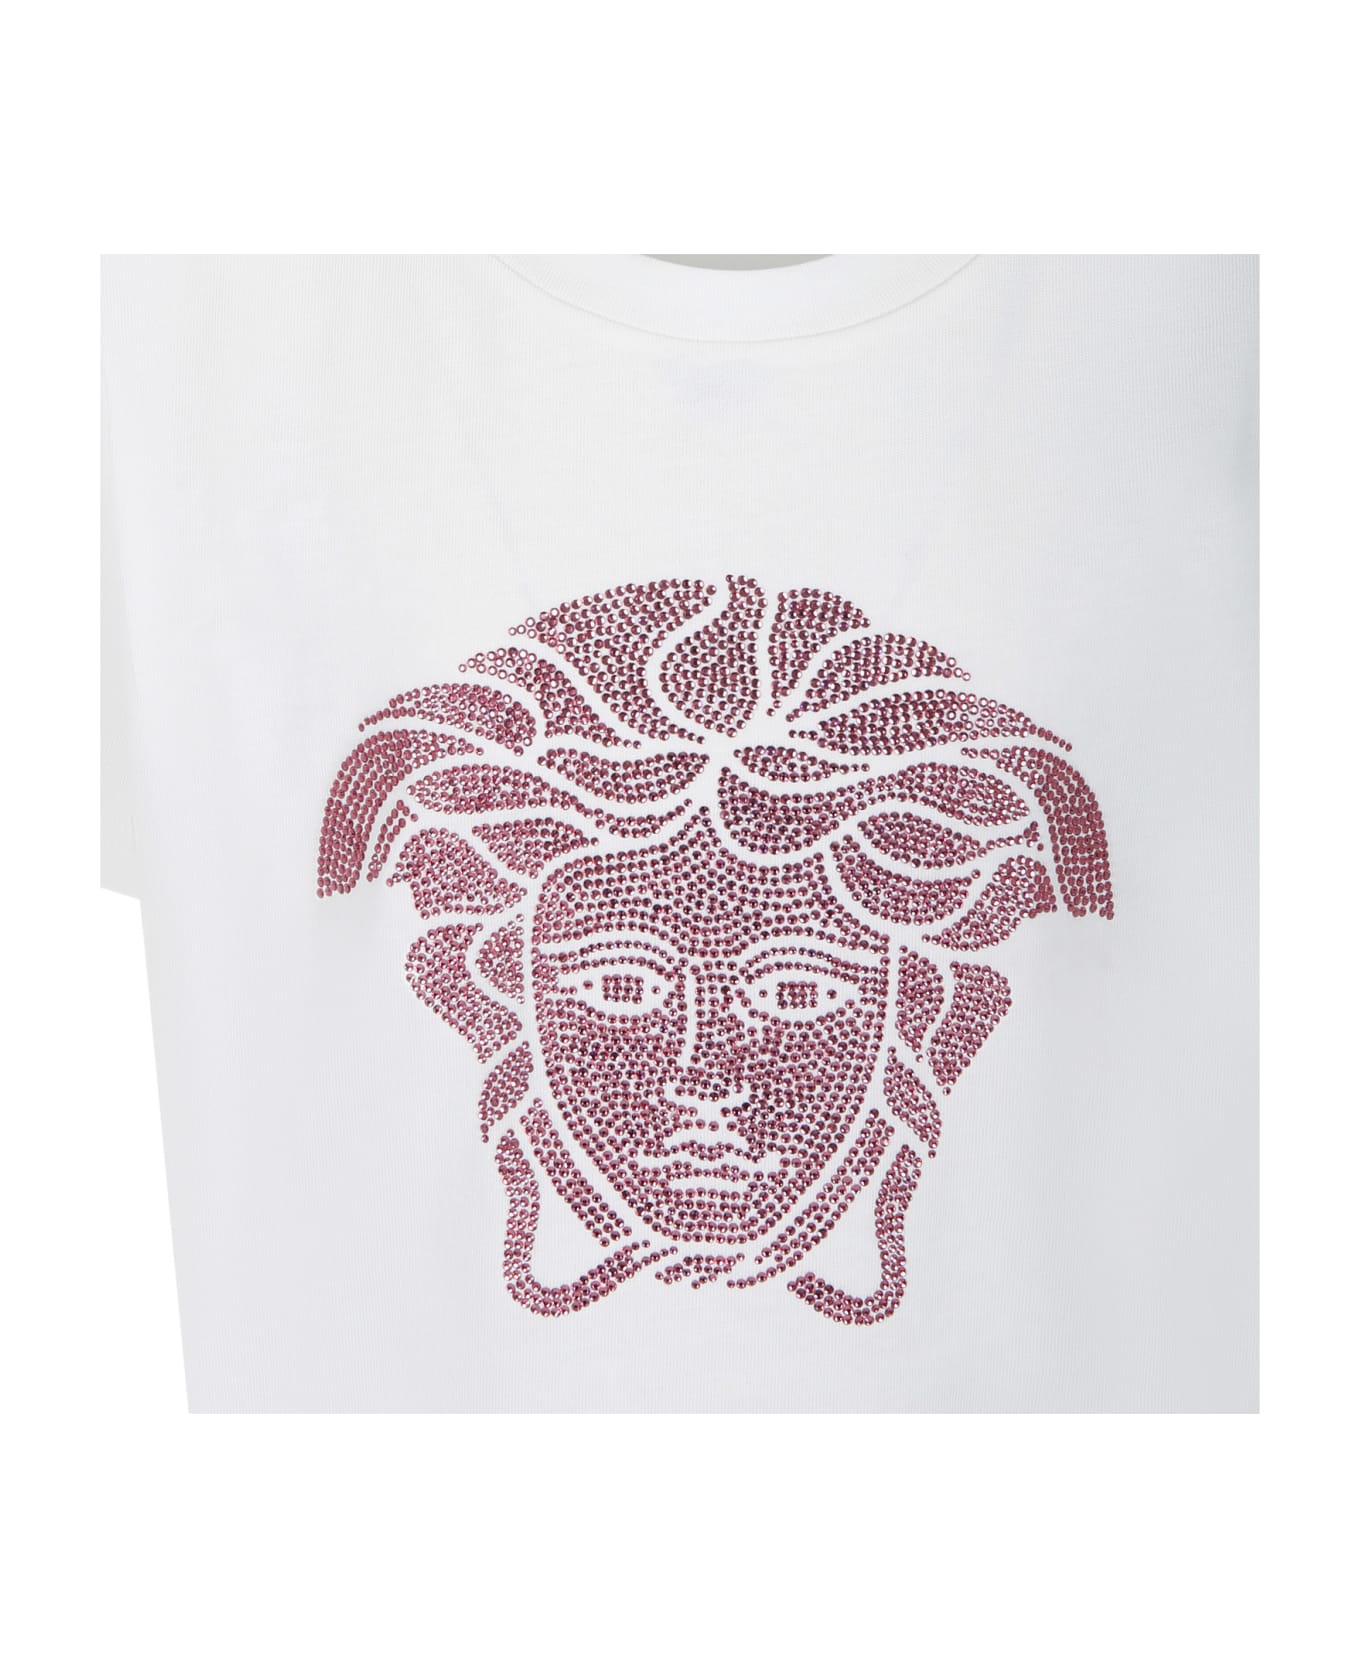 Versace White T-shirt For Girl With Medusa Versace - White